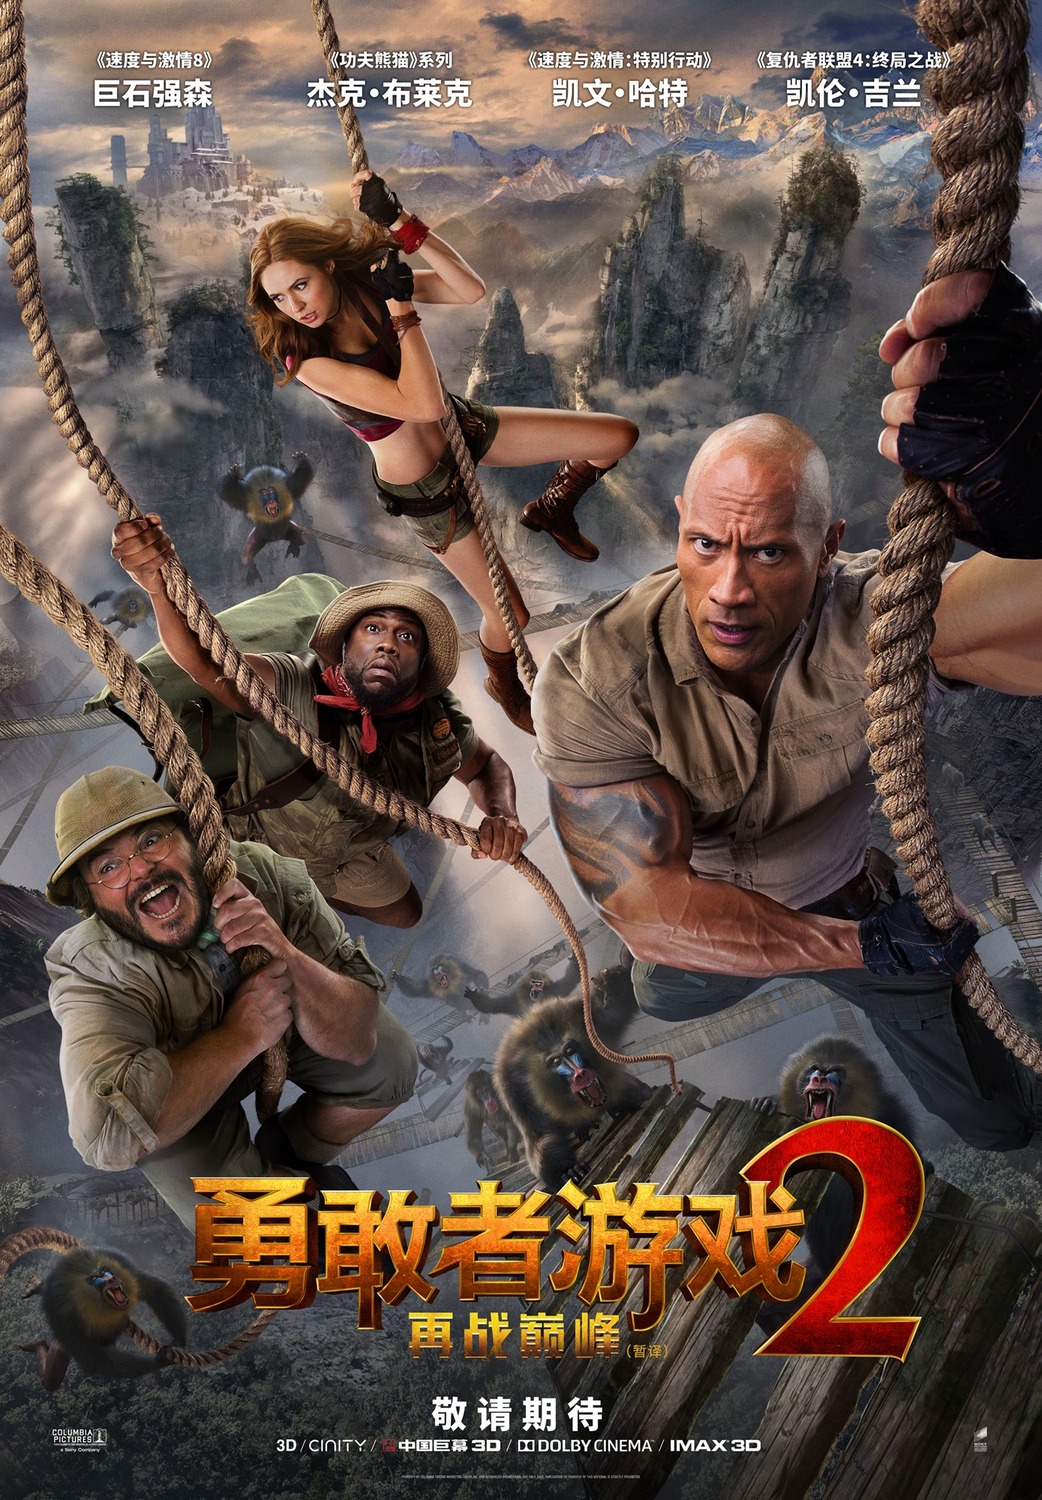 Extra Large Movie Poster Image for Jumanji: The Next Level (#11 of 24)